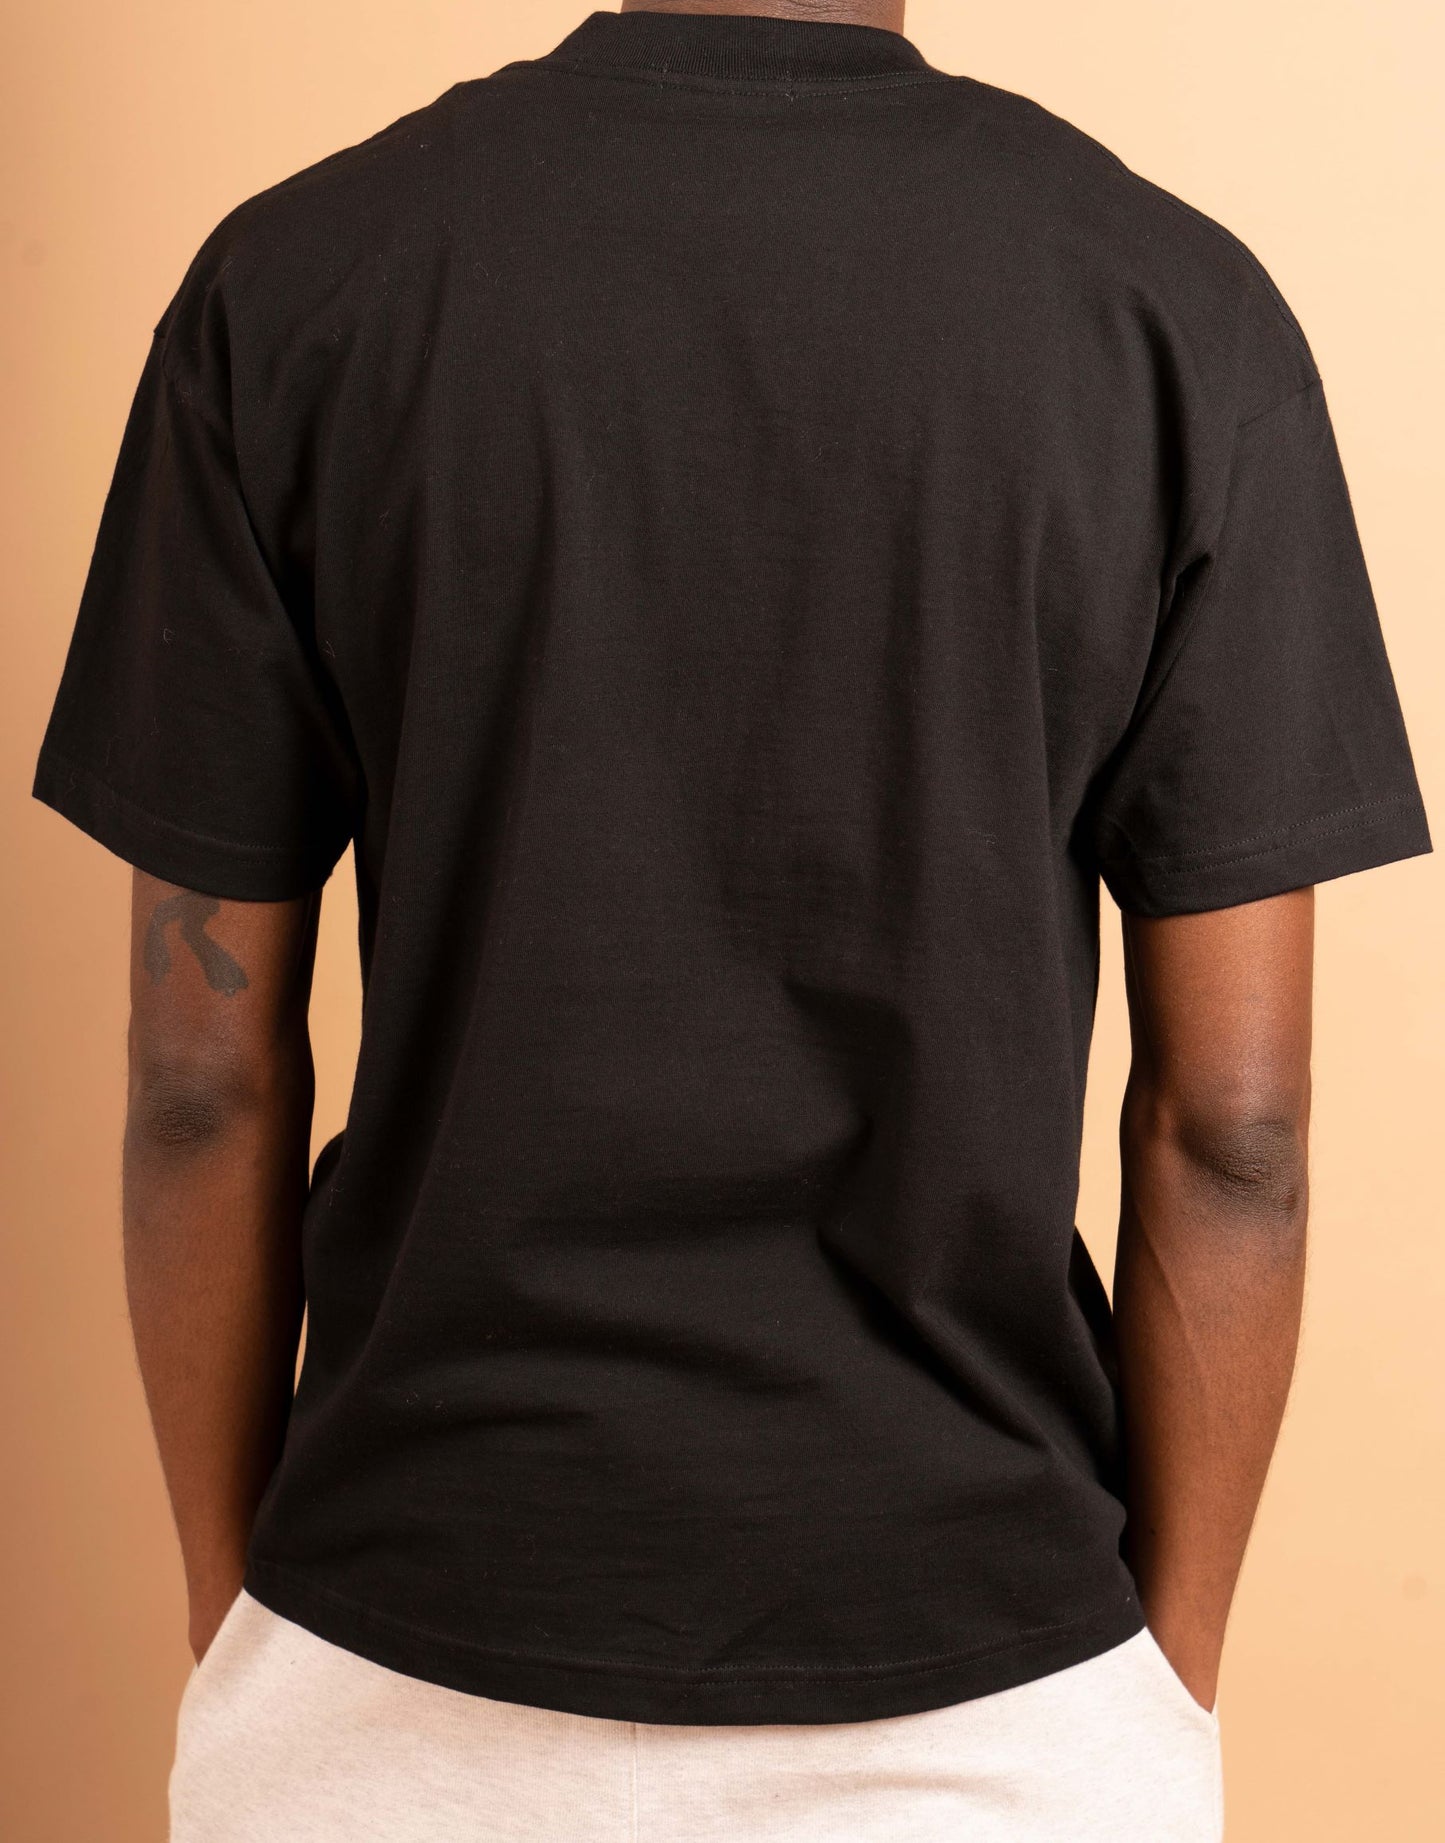 Hommewrk - Black Logo Shirt by Trinidad James (Crew Neck)